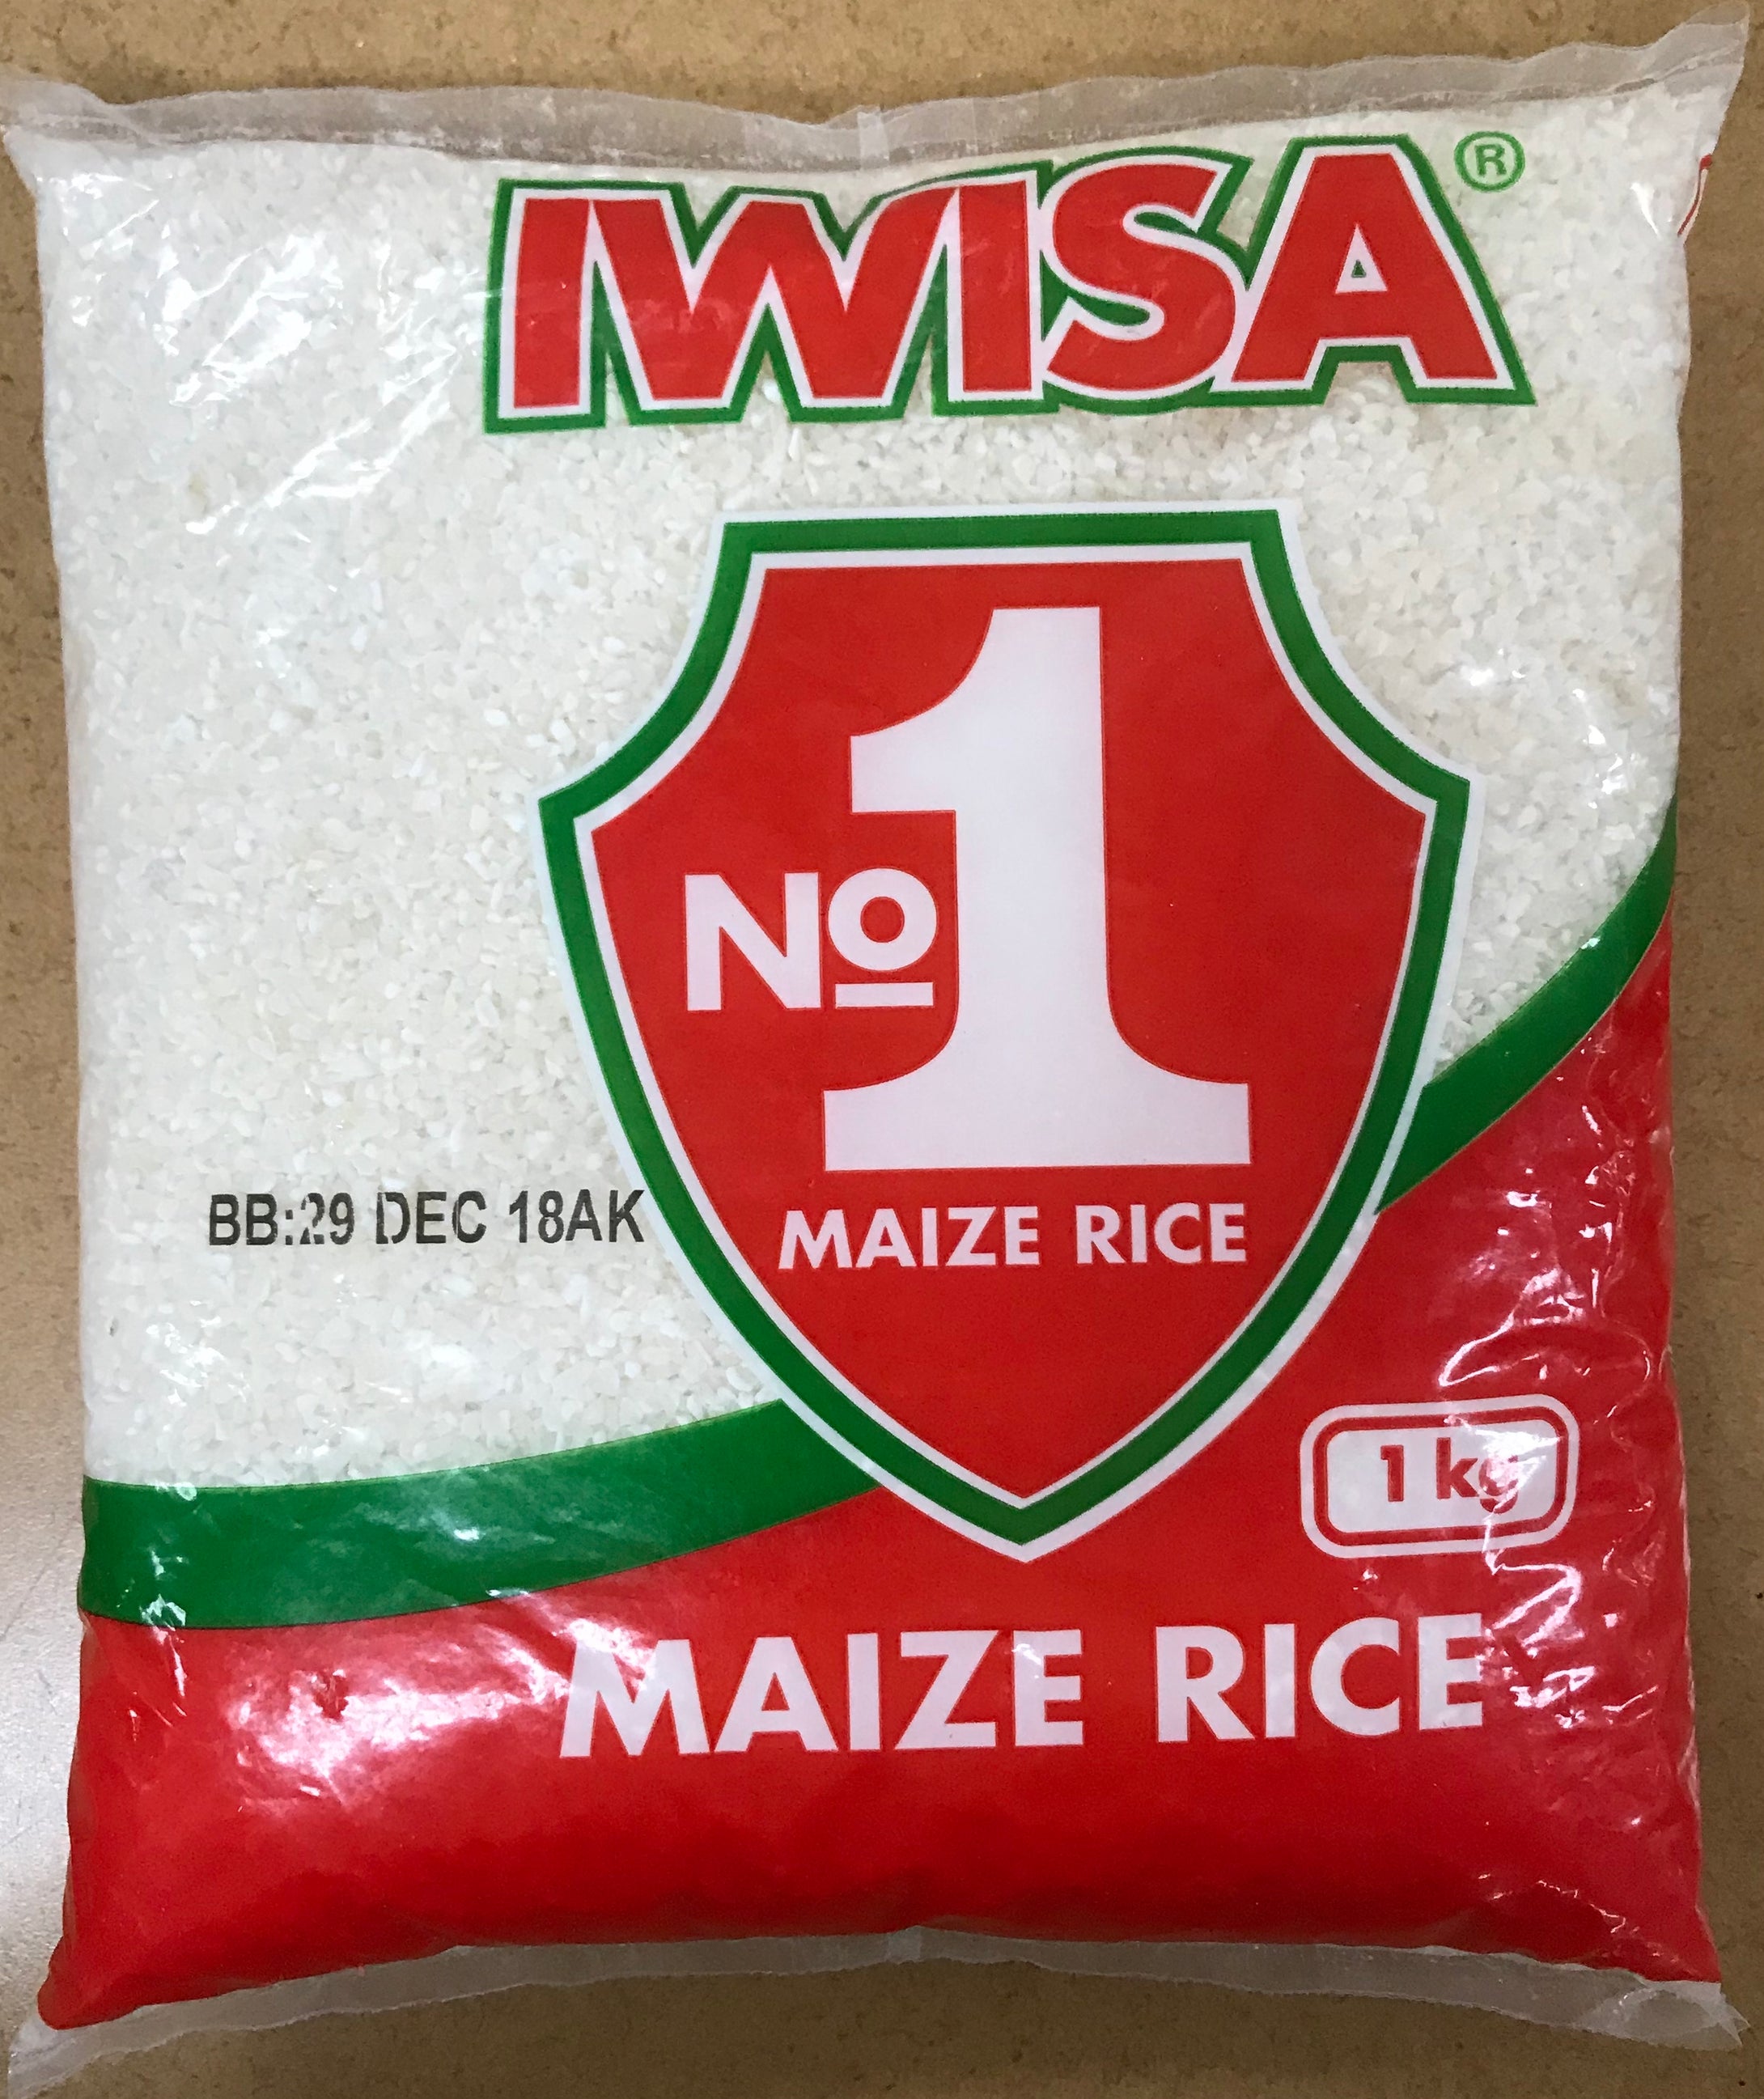 Iwisa Maize Rice 1KG